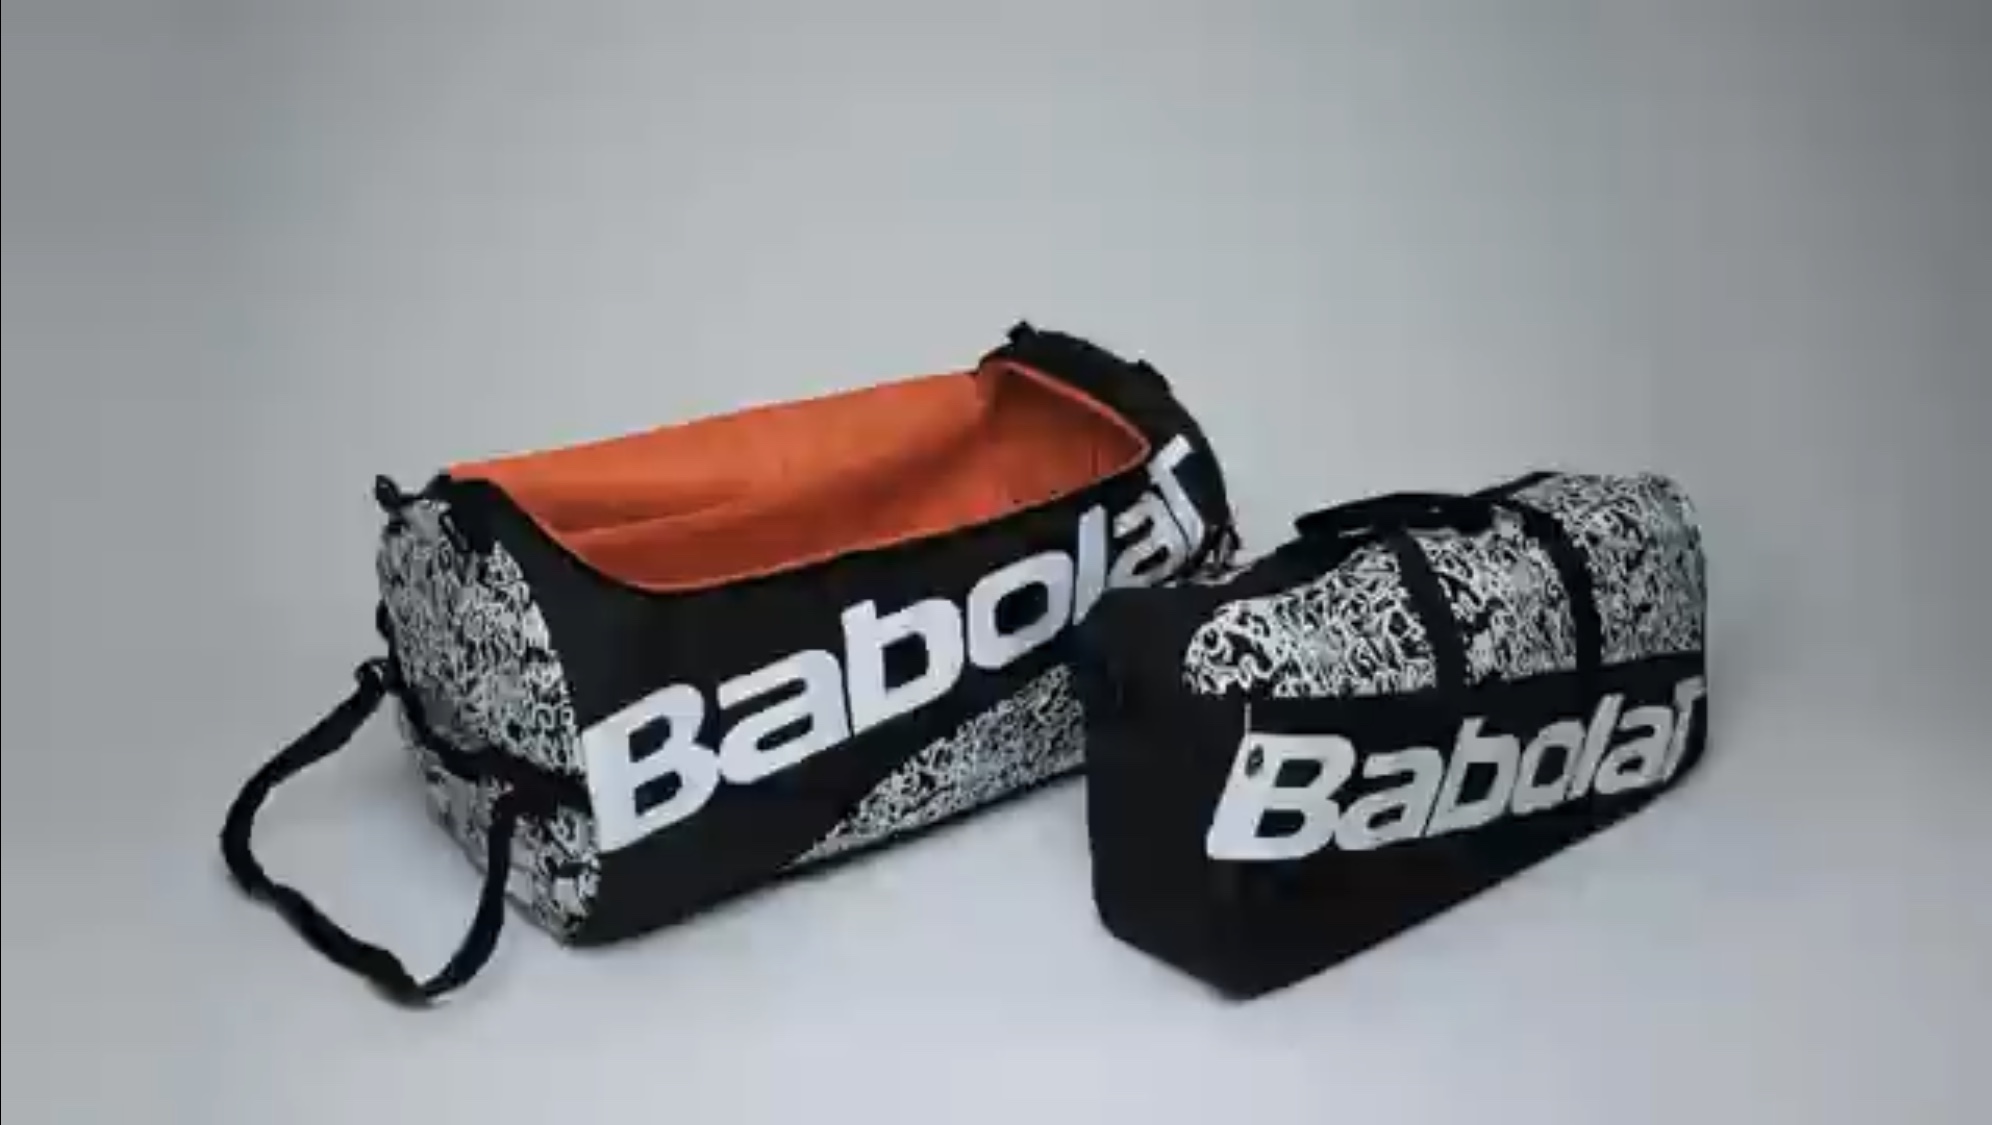 Un sac de voyage signé Babolat !